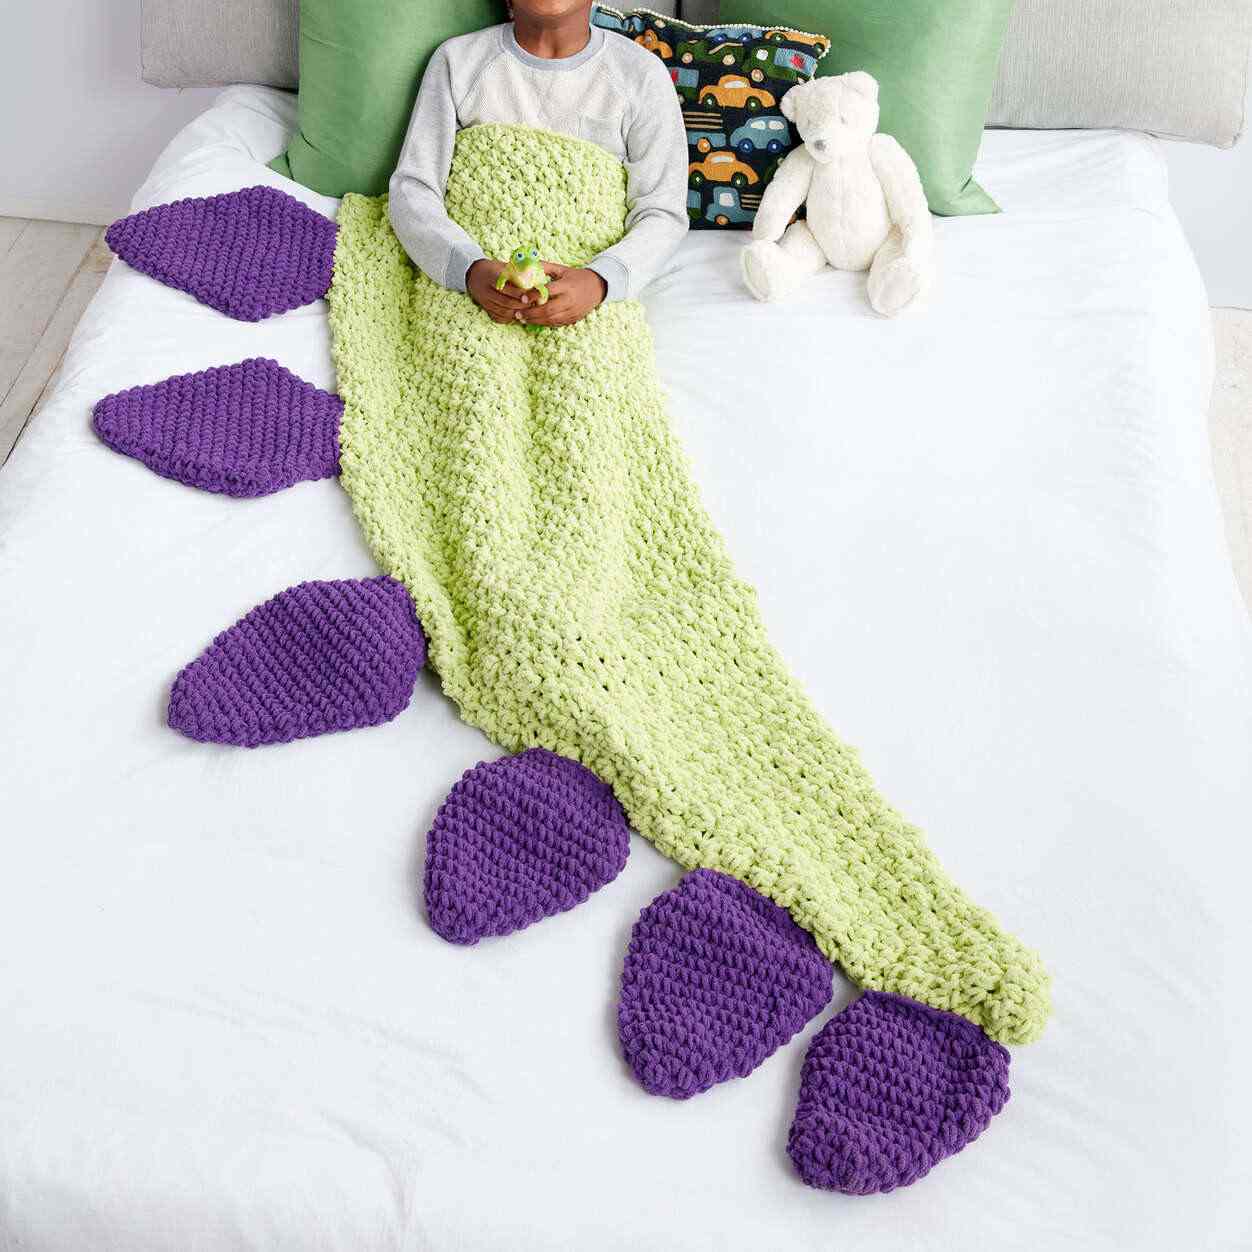 Dino Tail Crochet Snuggle Sack - Free Crochet Pattern